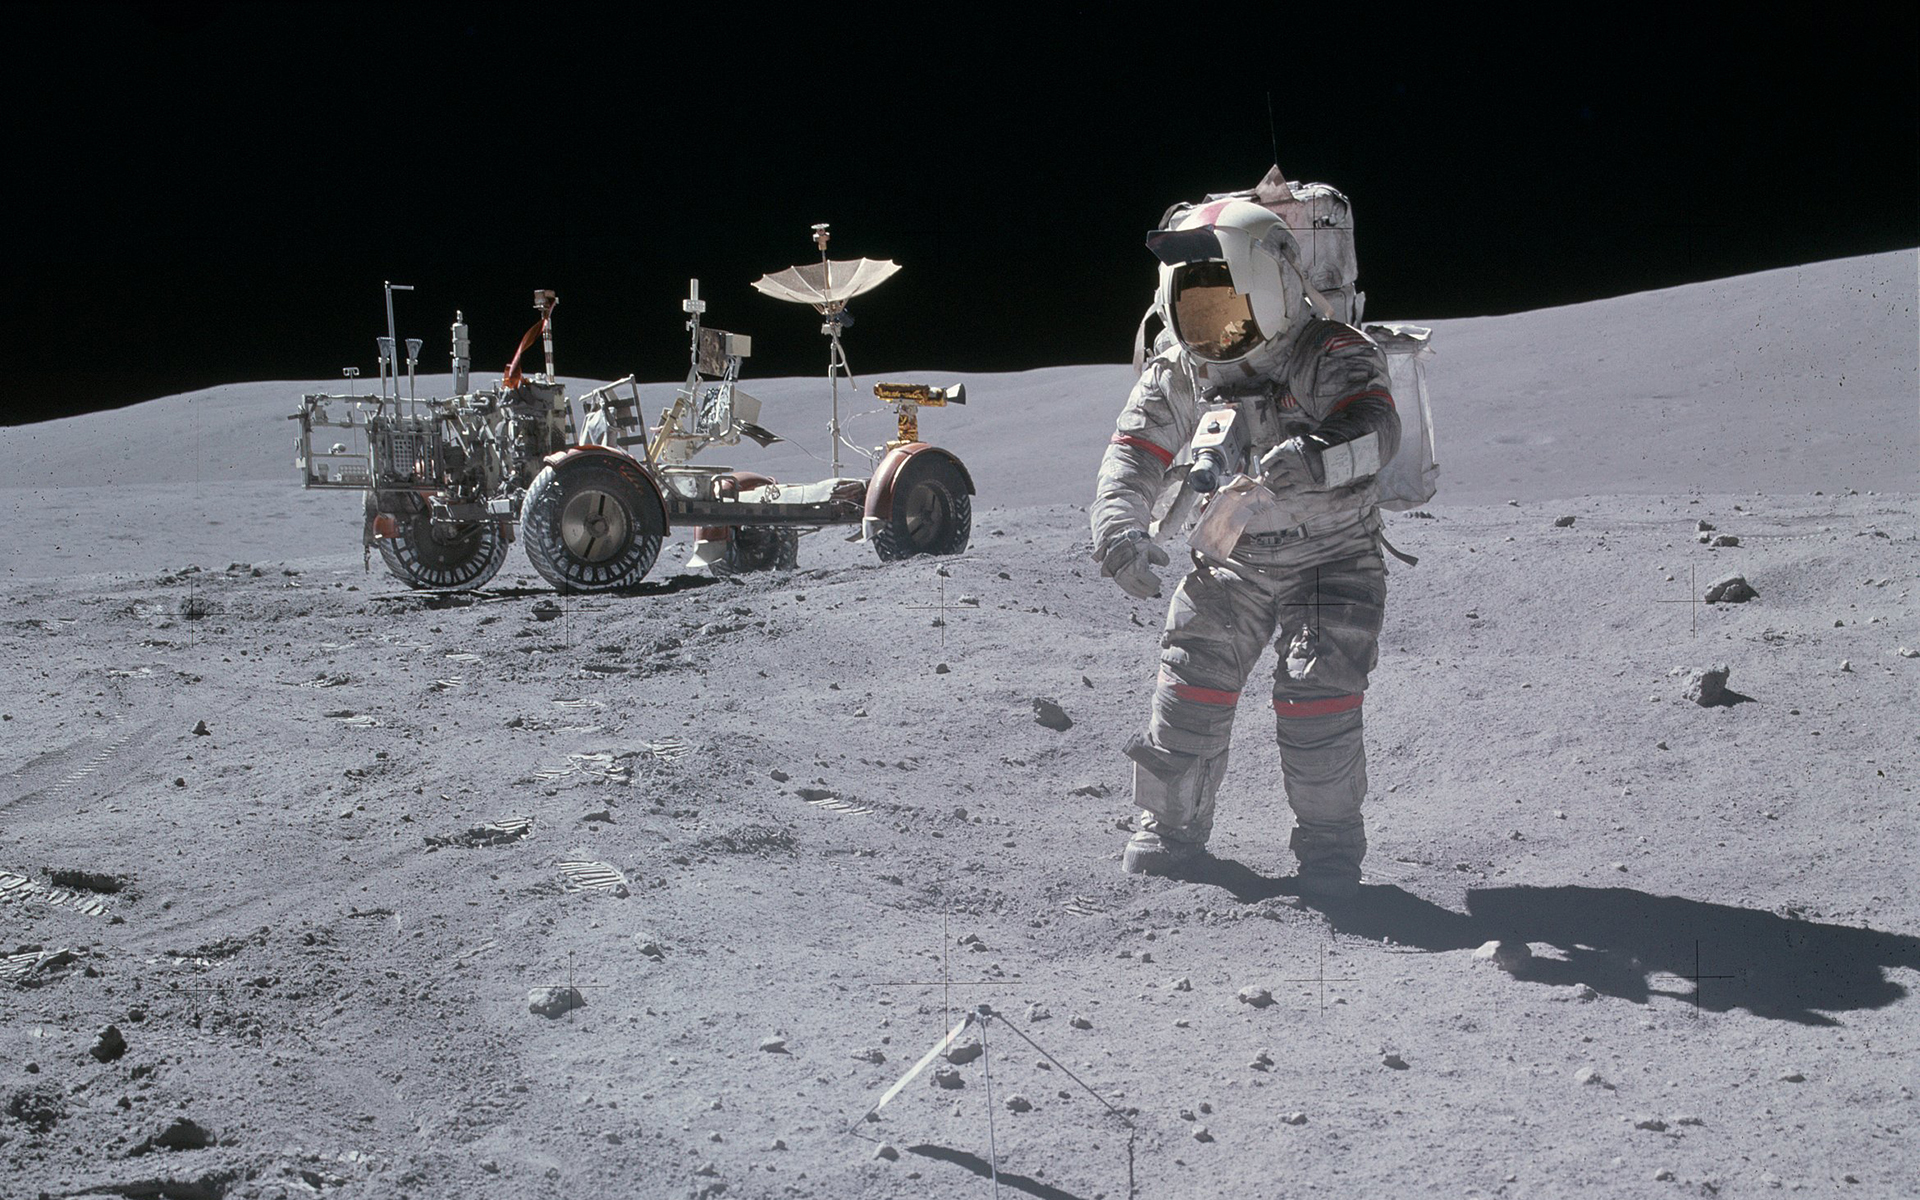 Armstrong on the moon. Человек на Луне Аполлон 11. Миссия Аполлон 11. Аполлон 16 фото на Луне.